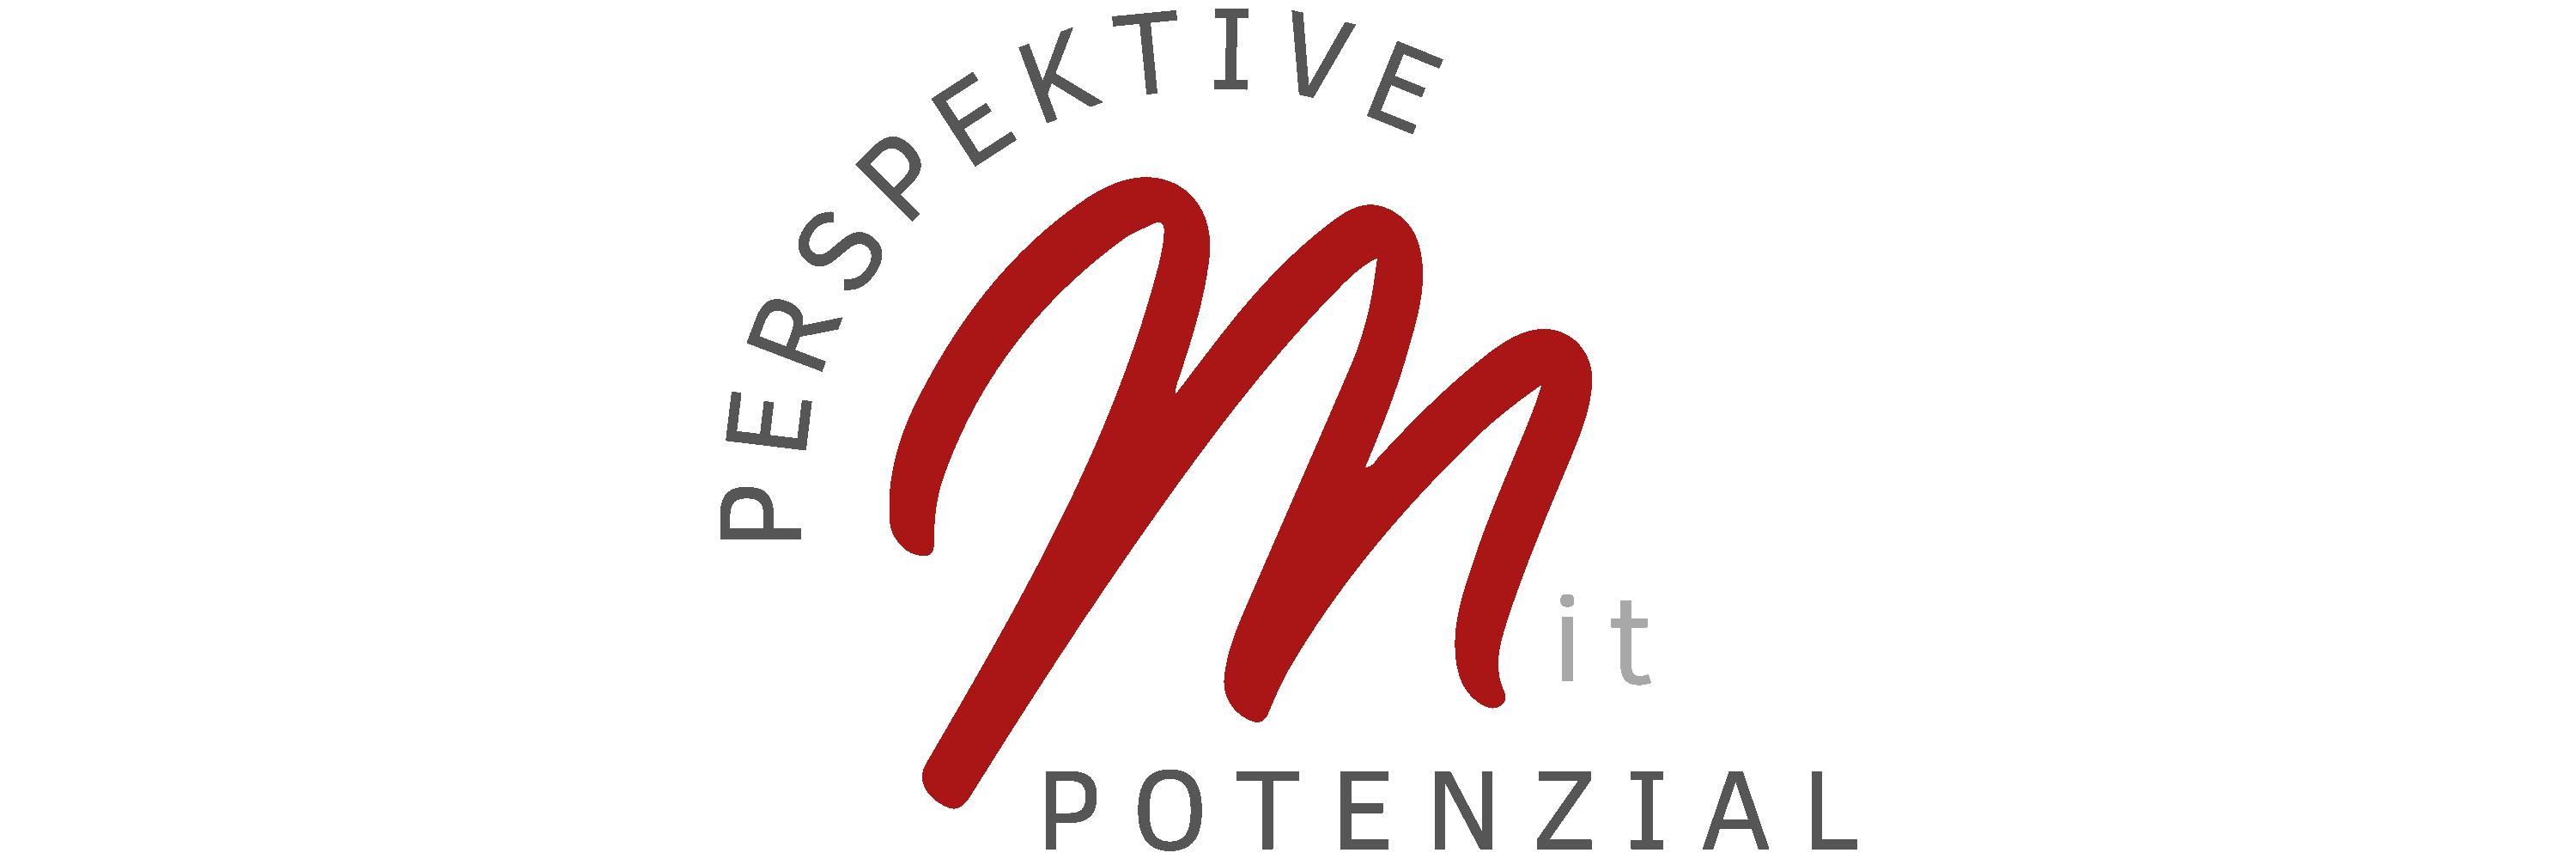 Logo_Perspektive_mit_Potenzial_wide_2